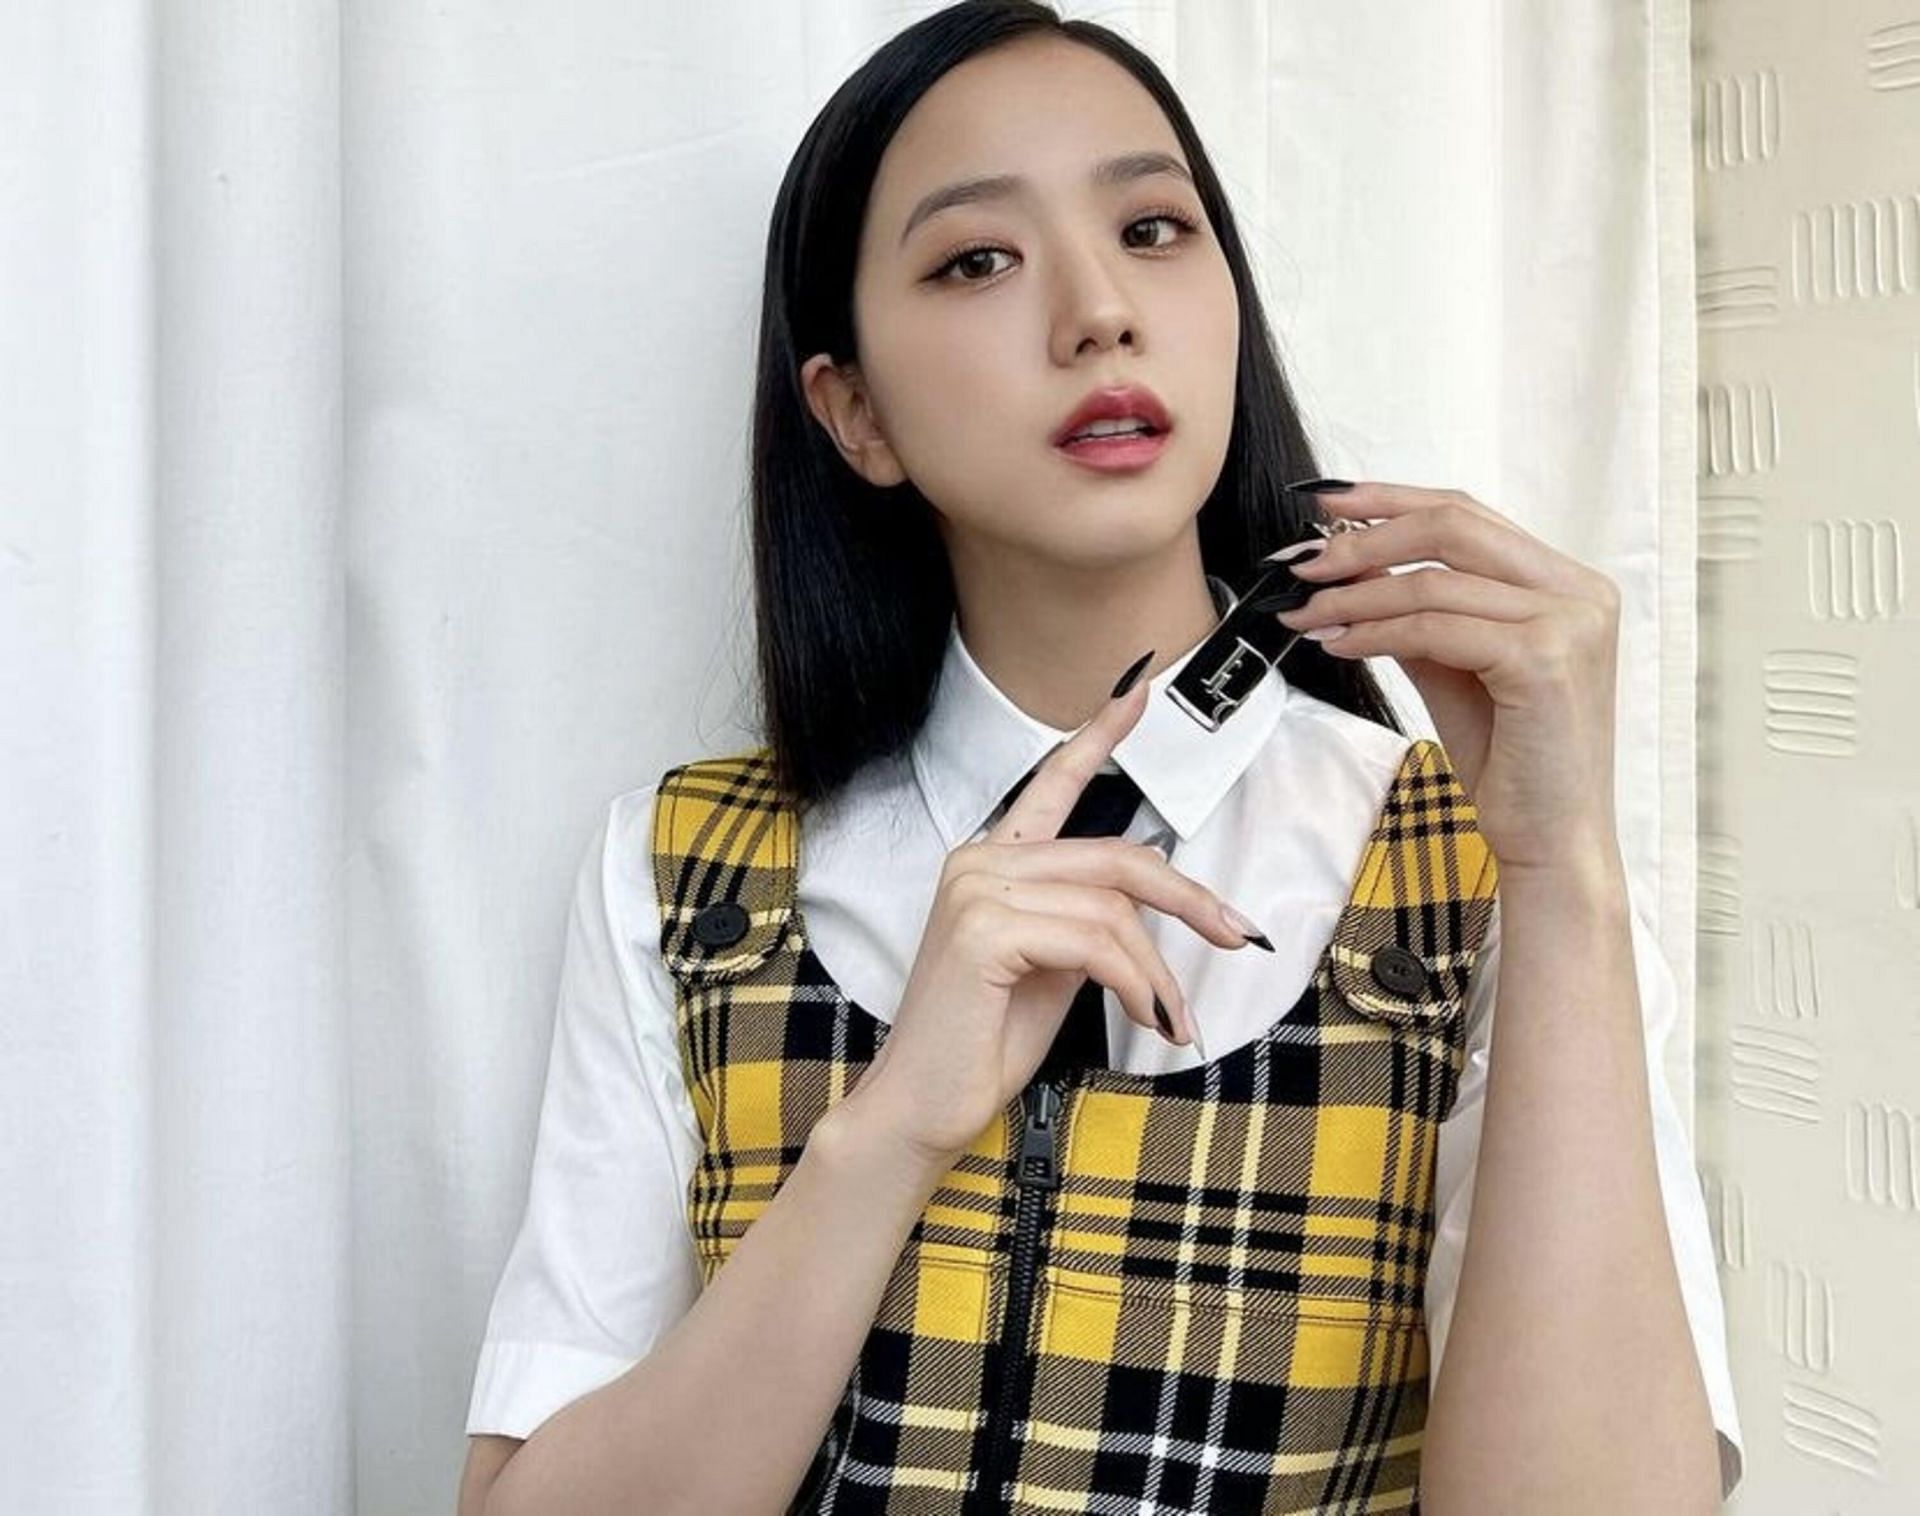 BLACKPINK's Jisoo makes heads turn at Paris Fashion Week 2022